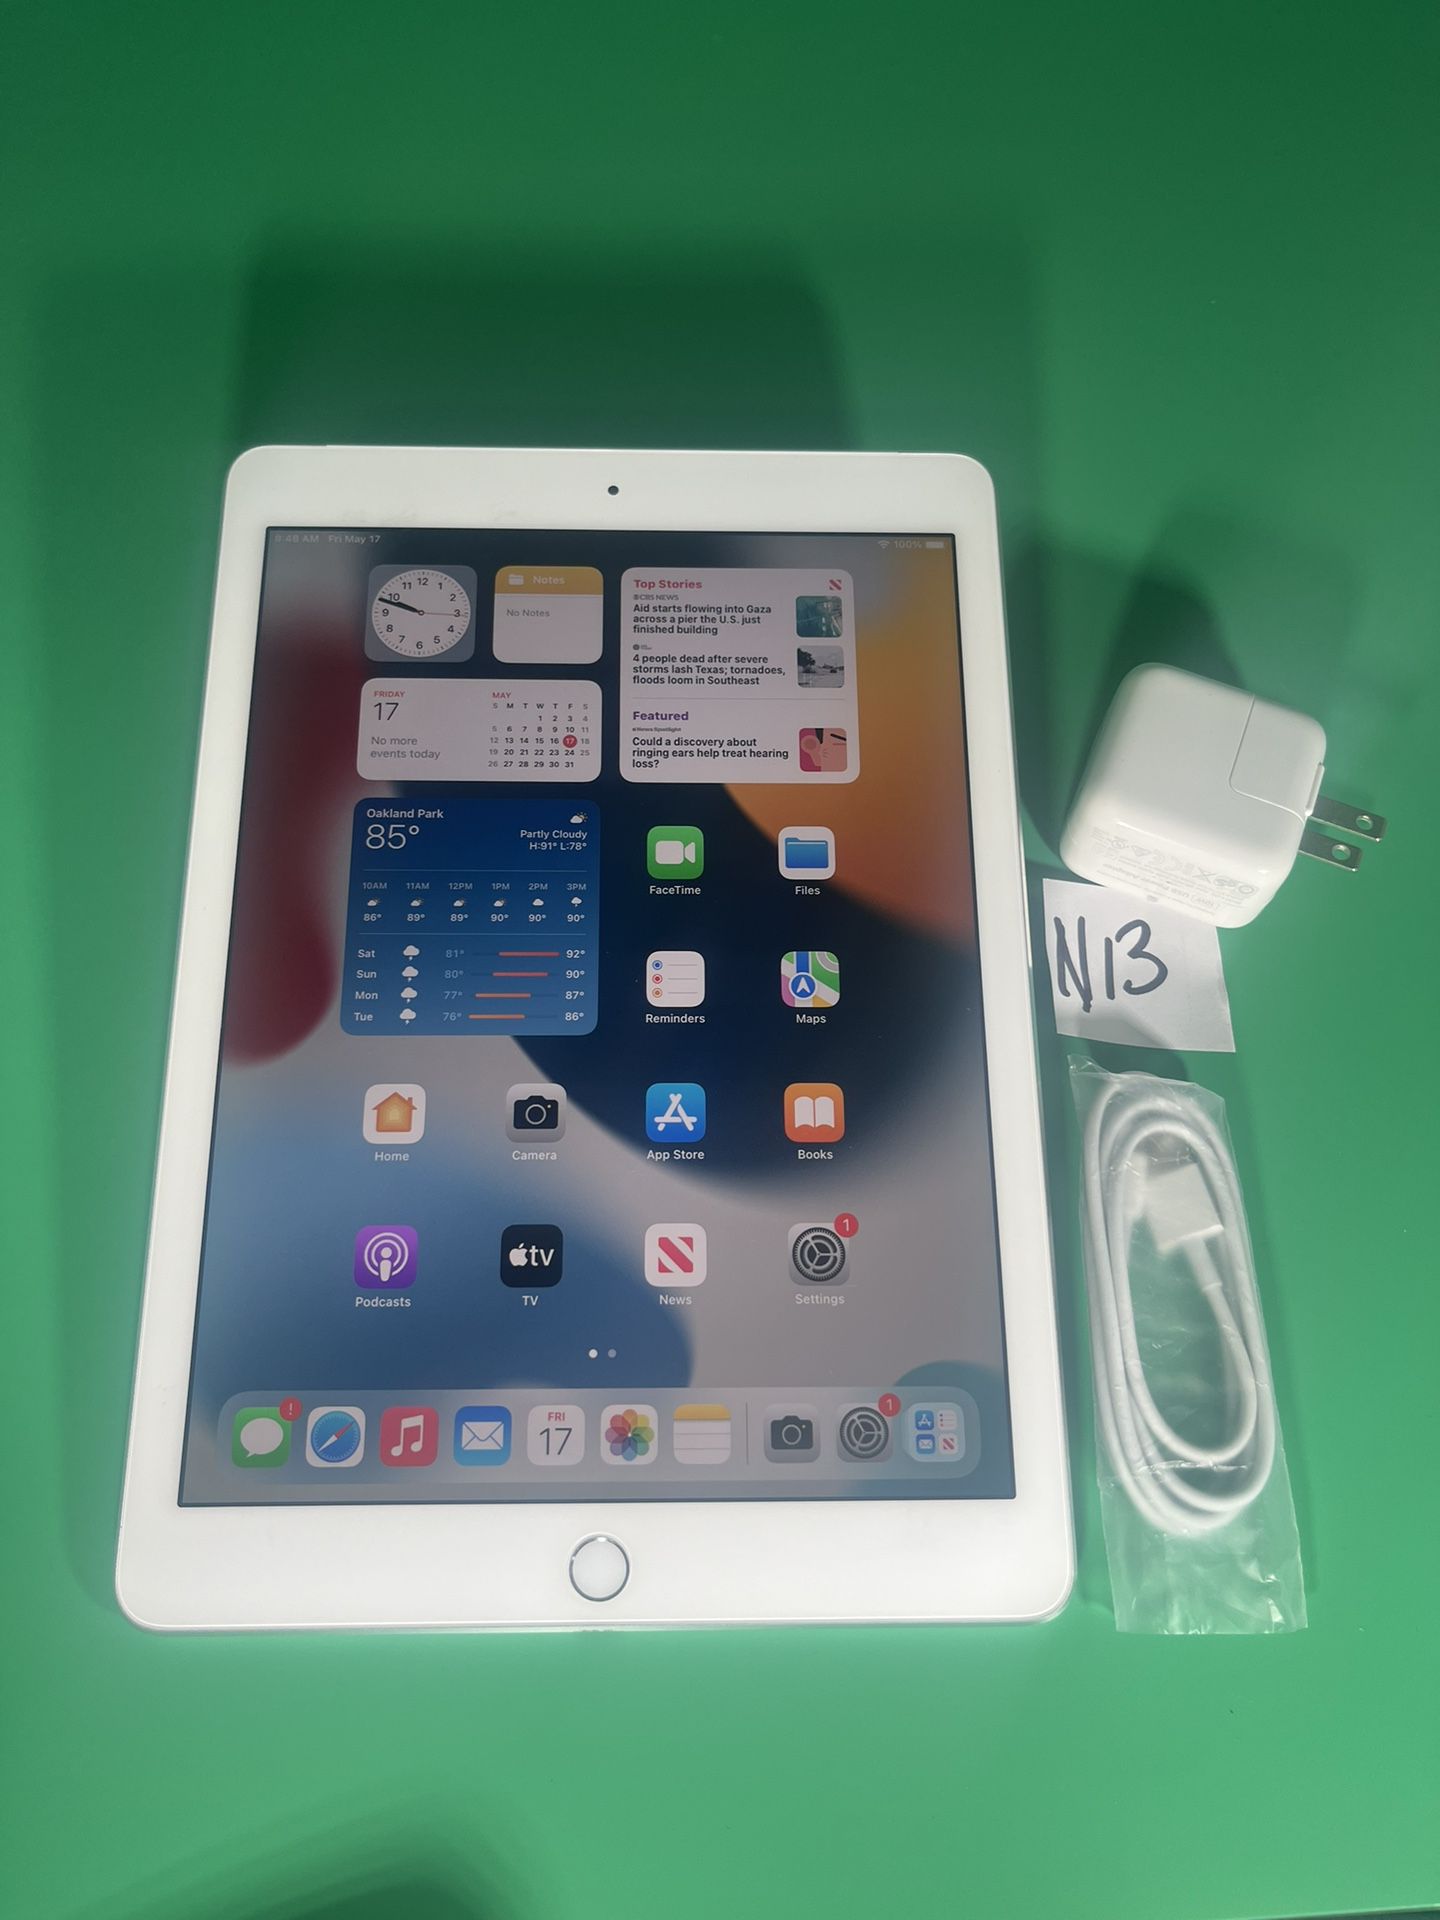 Apple iPad AIR 2 64GB WiFi + Cellular unlocked 9.7” iPad—White/Silver  